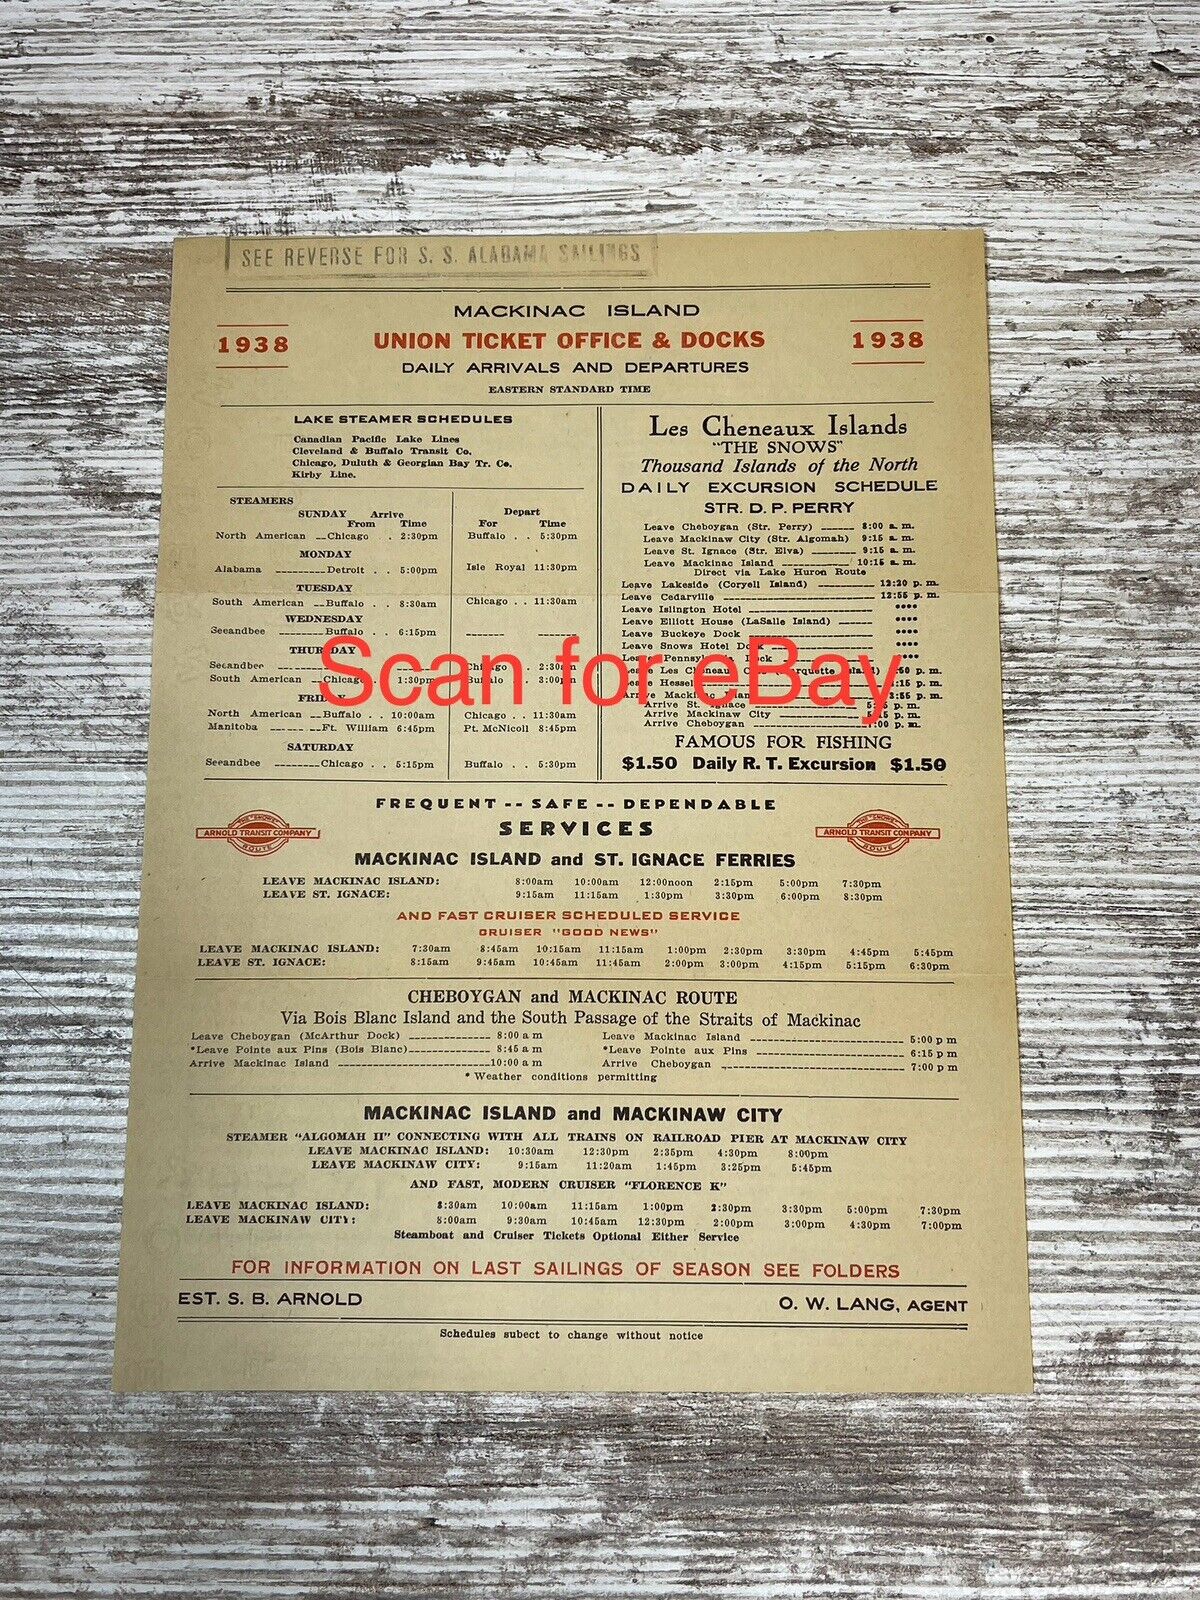 Vtg 1938 Mackinac Island Schedule Union Ticket Docks Arnold Transit S.S. Alabama